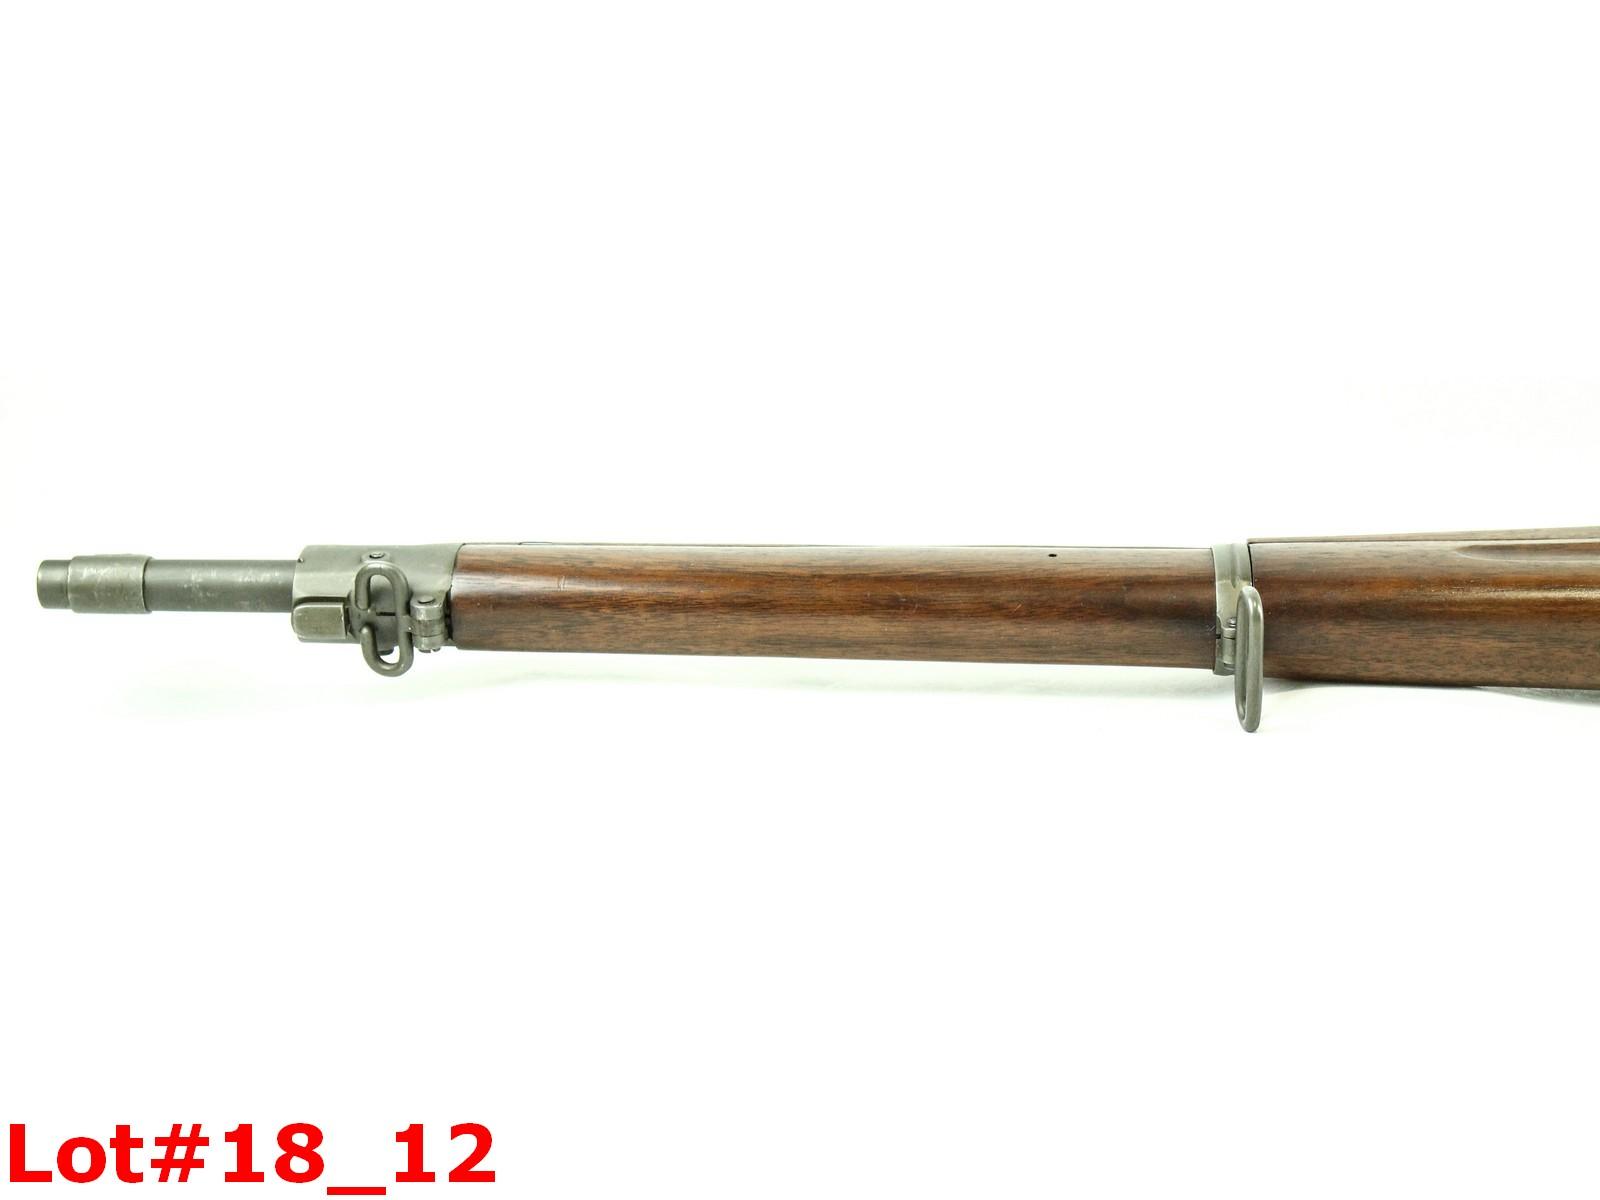 Springfield Mark I 1903 Model 30-06 Caliber Rifle